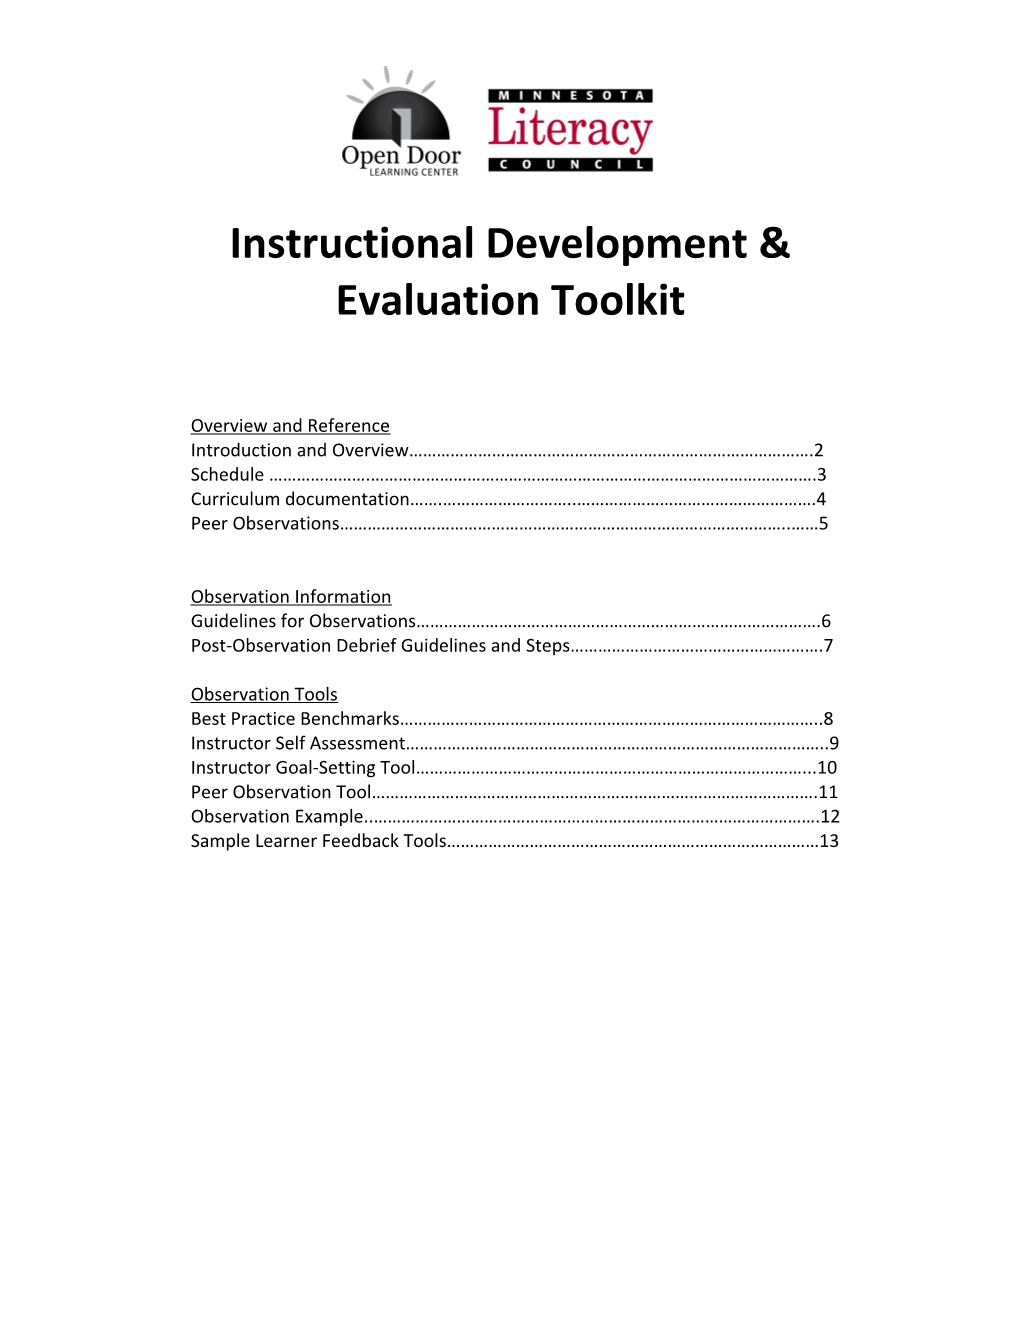 Instructional Development & Evaluation Toolkit